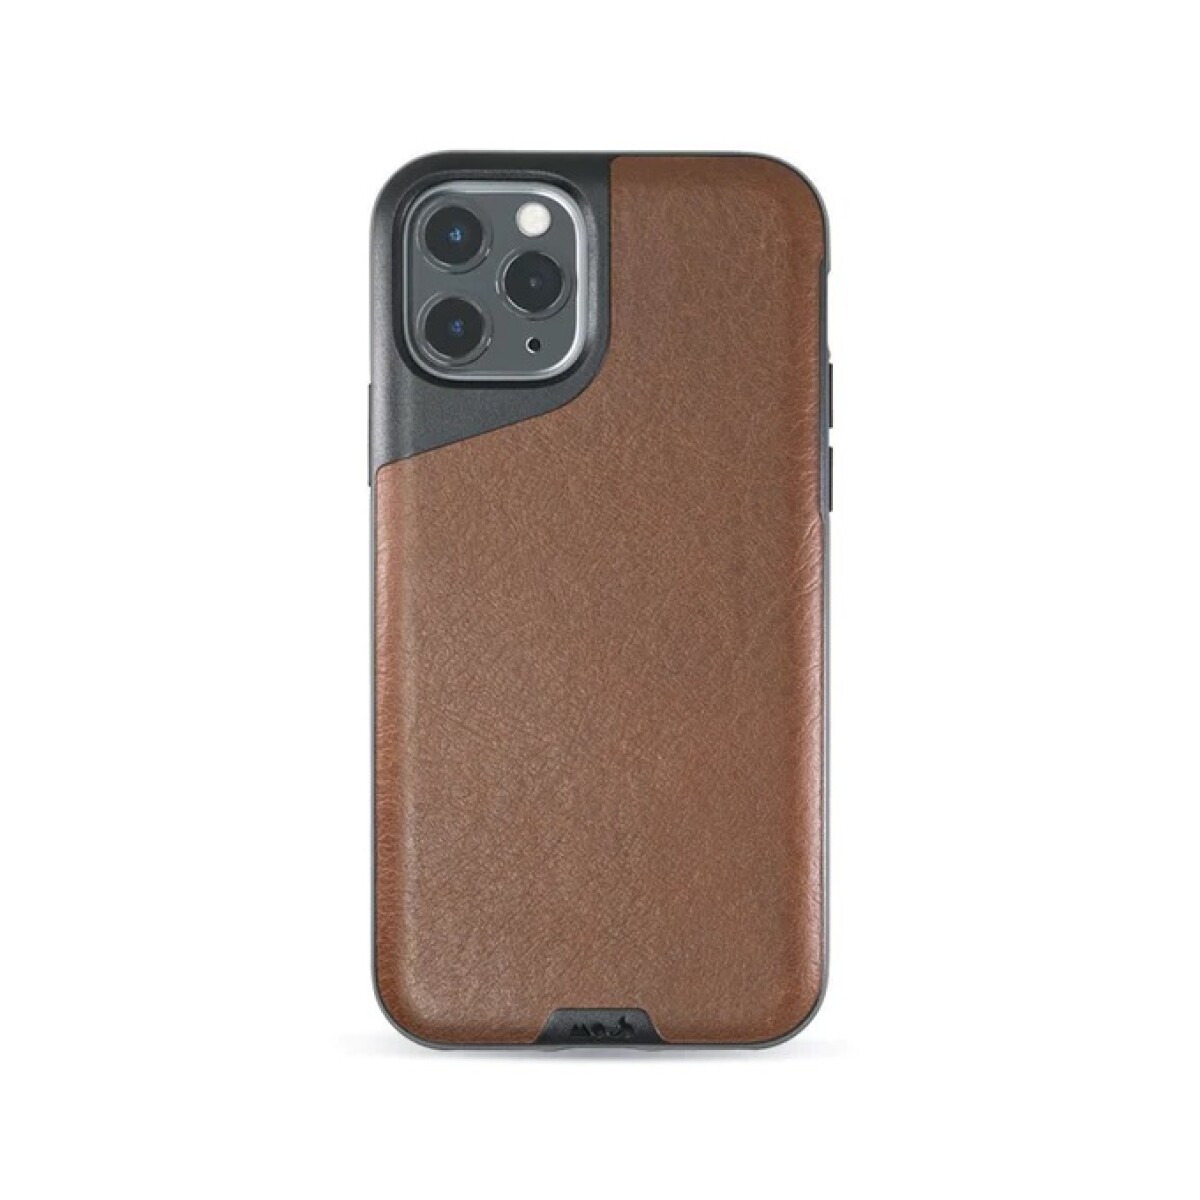 Funda Contour Case iPhone 11 Pro Max Leather Brown 